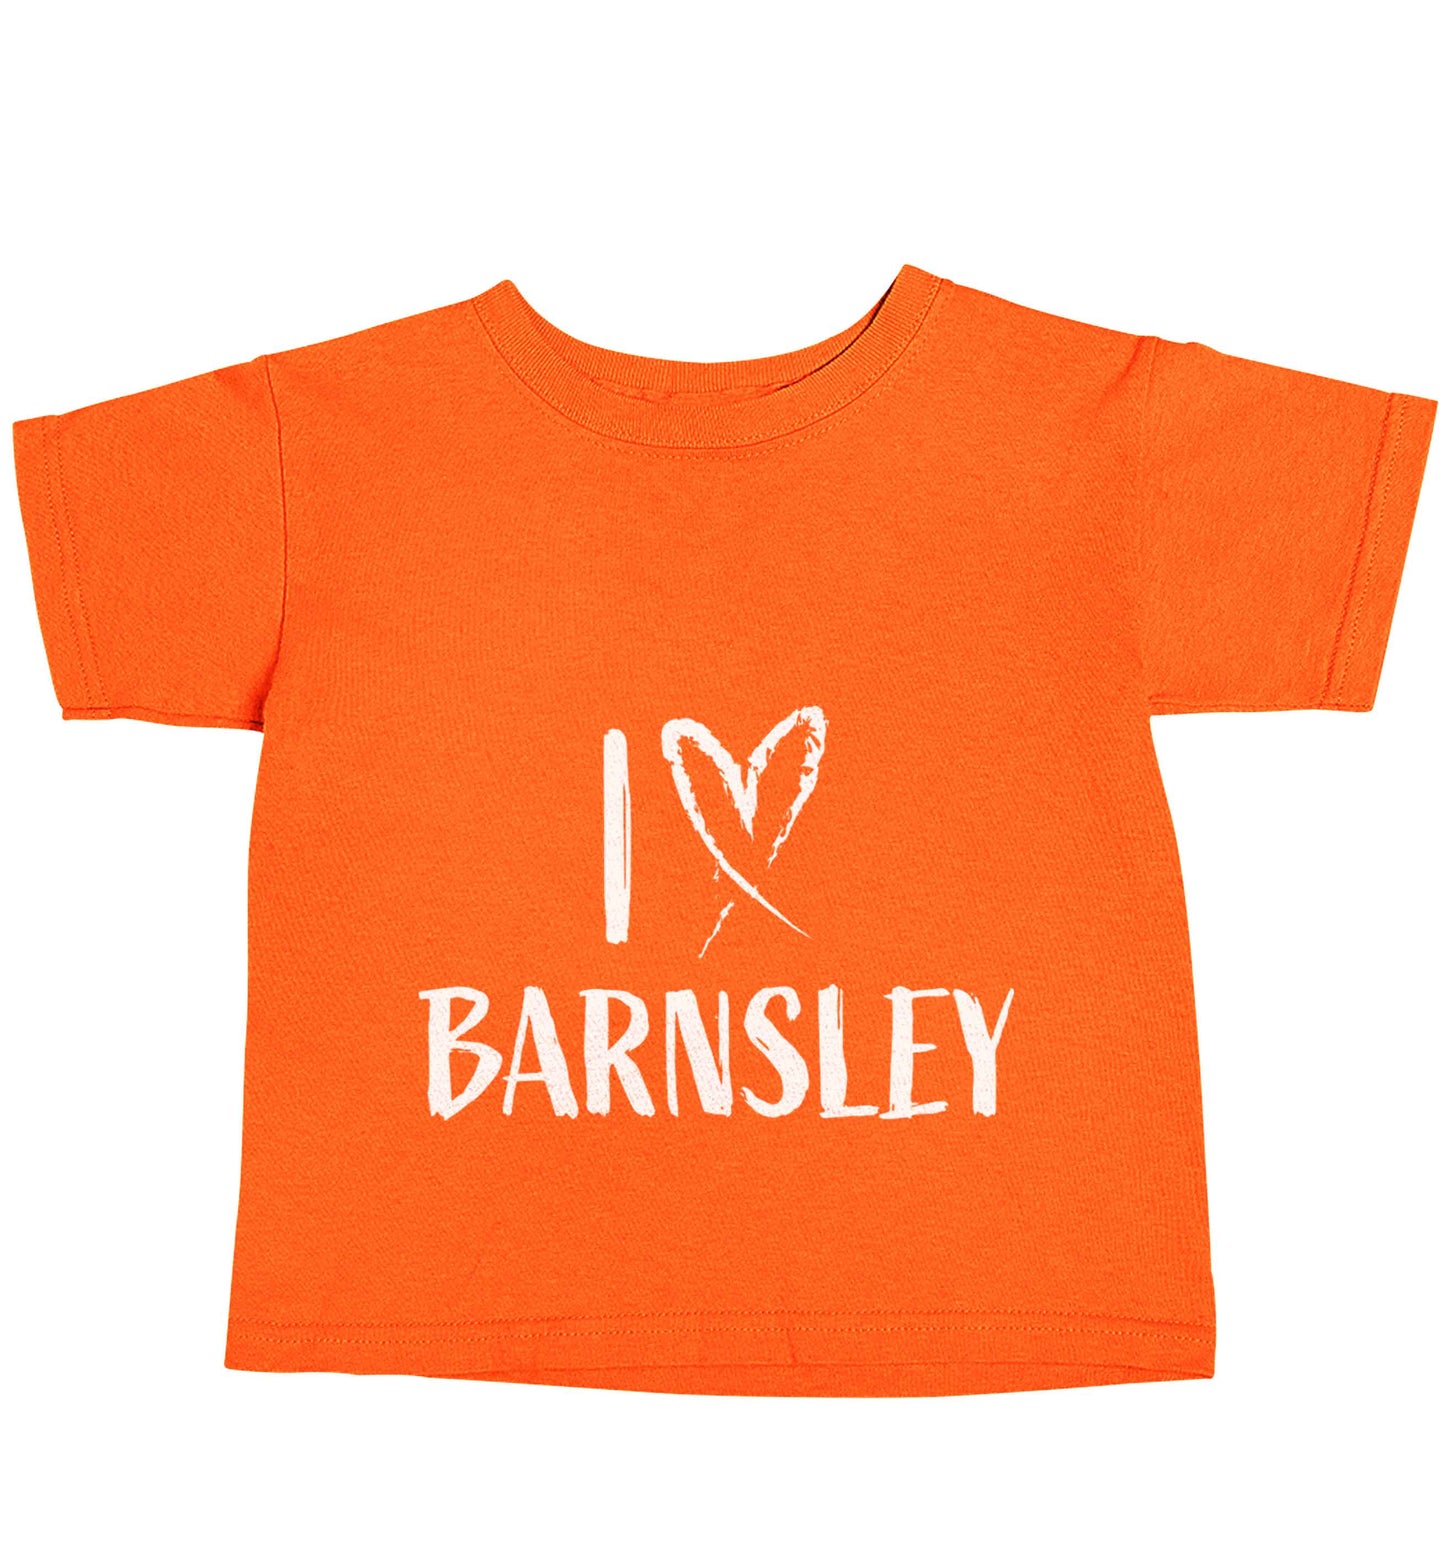 I love Barnsley orange baby toddler Tshirt 2 Years